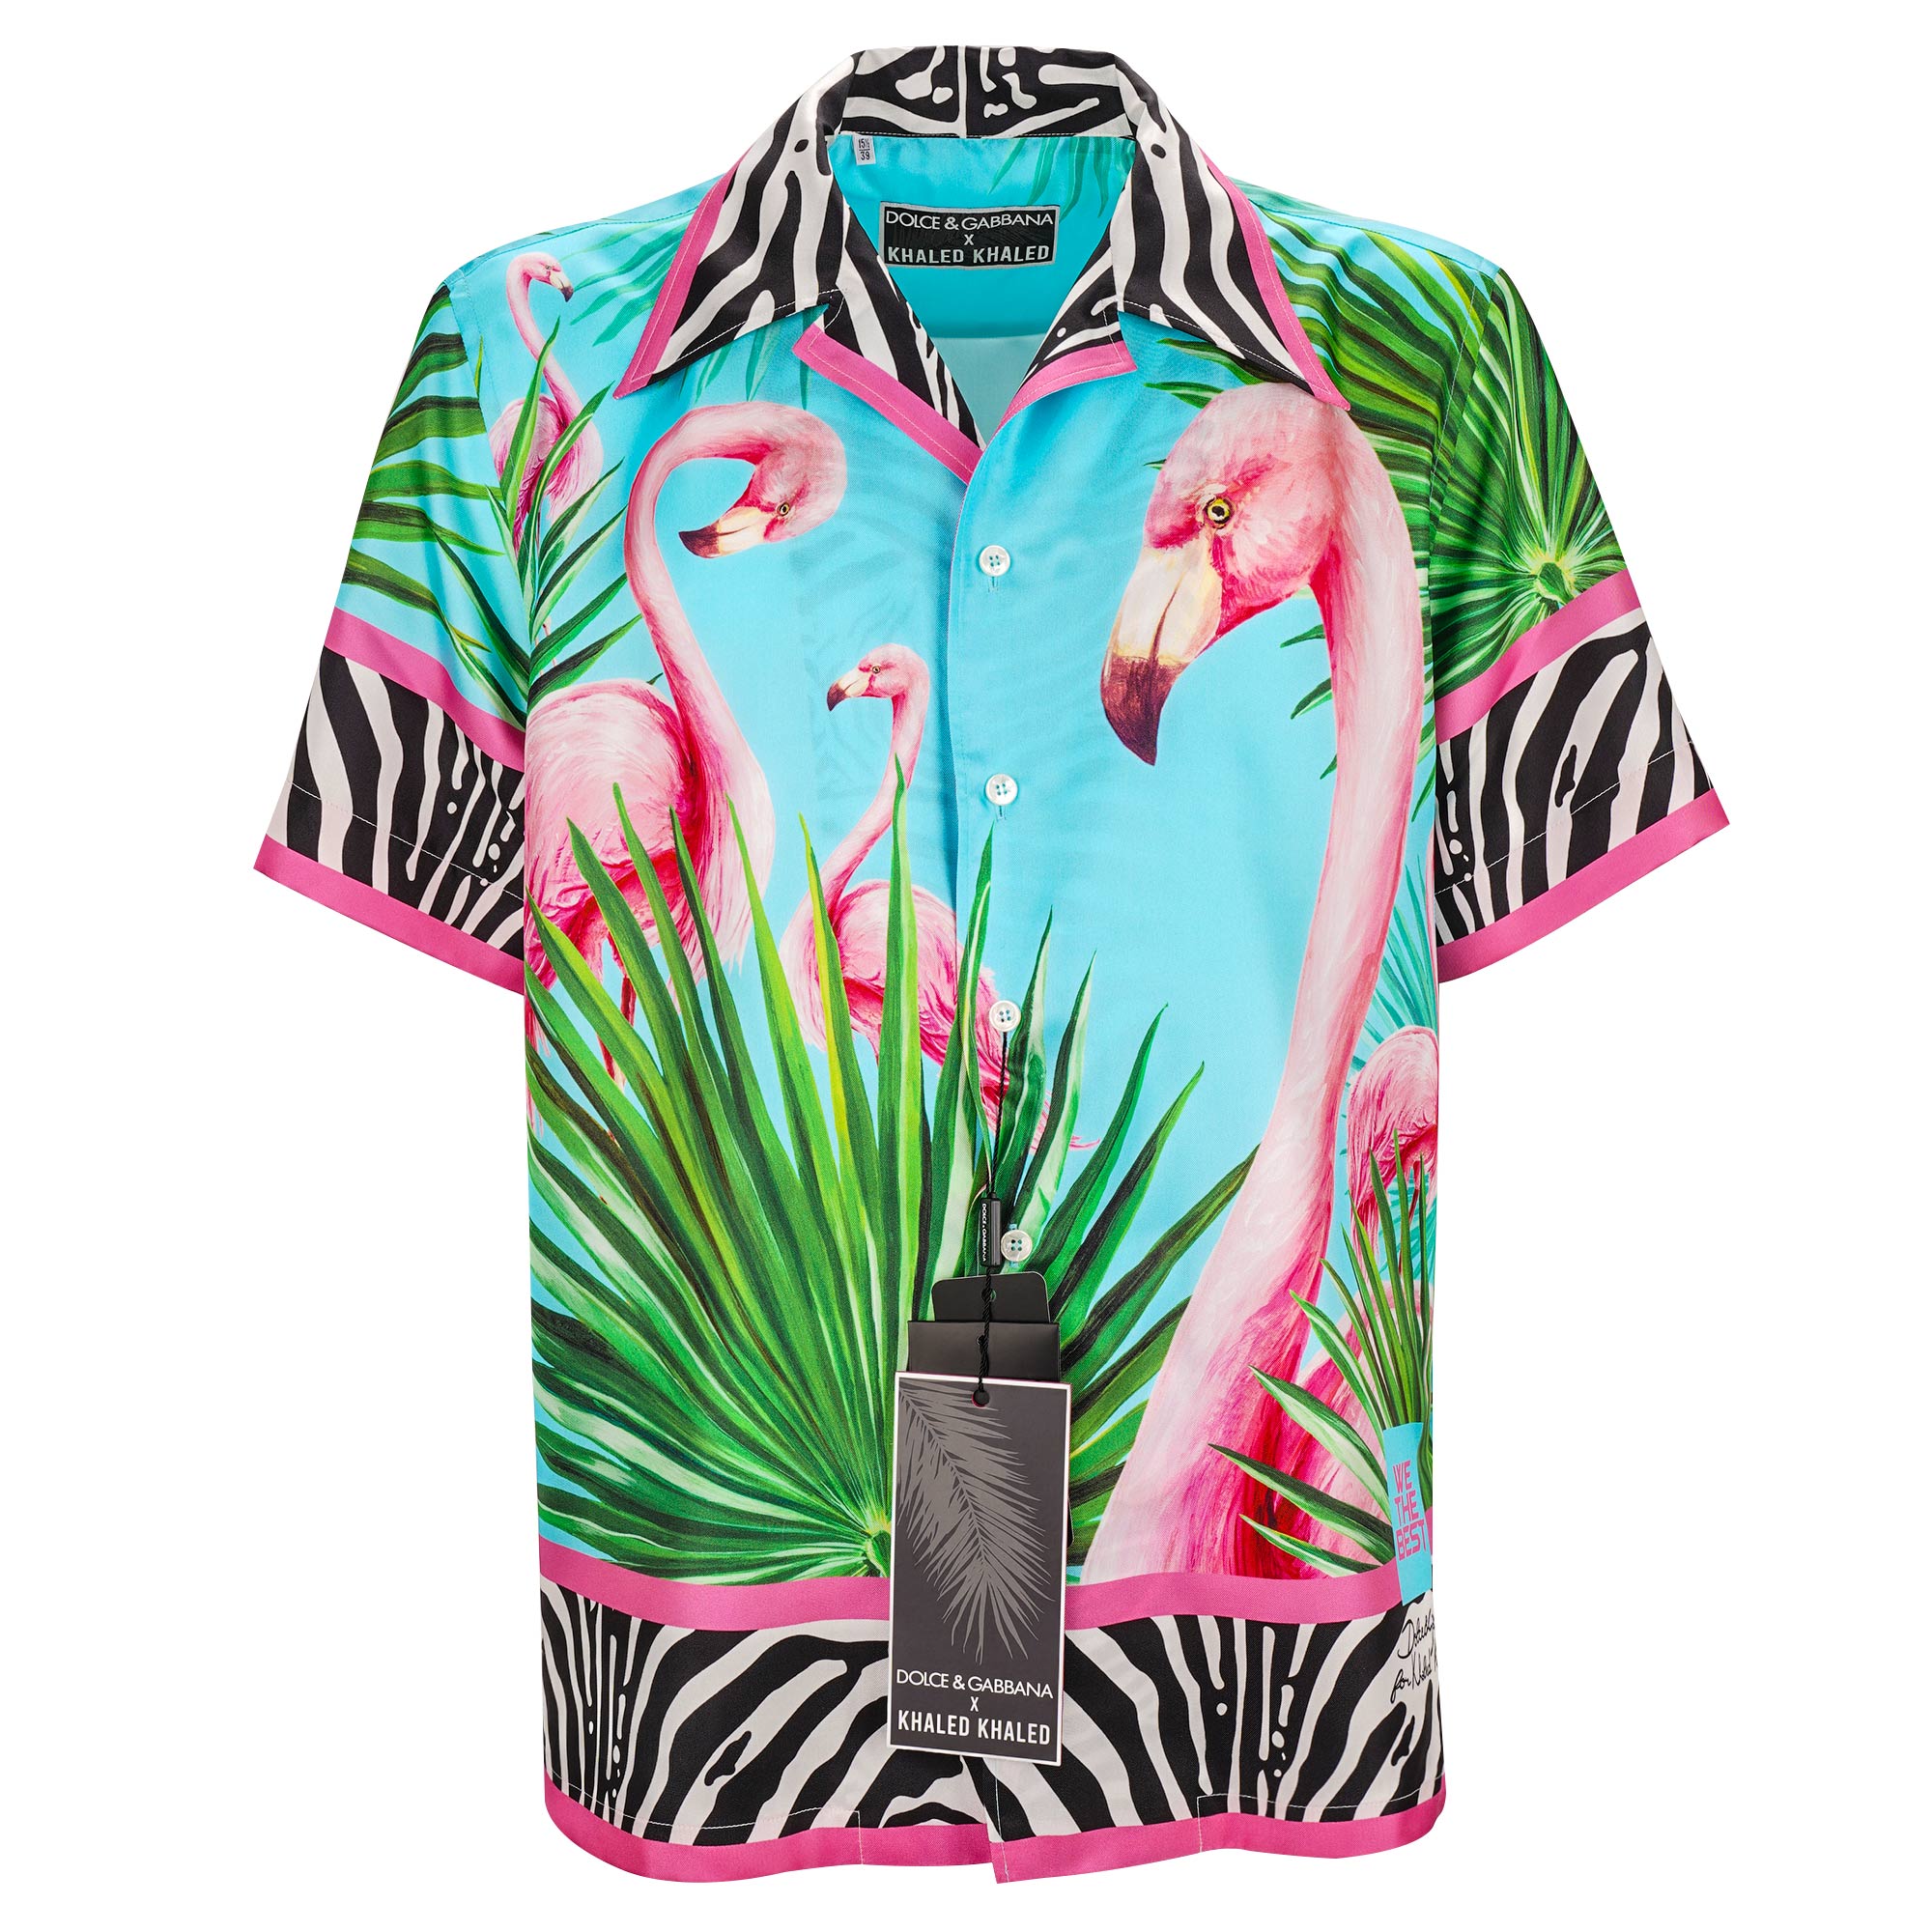 DJ Khaled Silk Flamingo Zebra Shirt with Sunglasses and CD